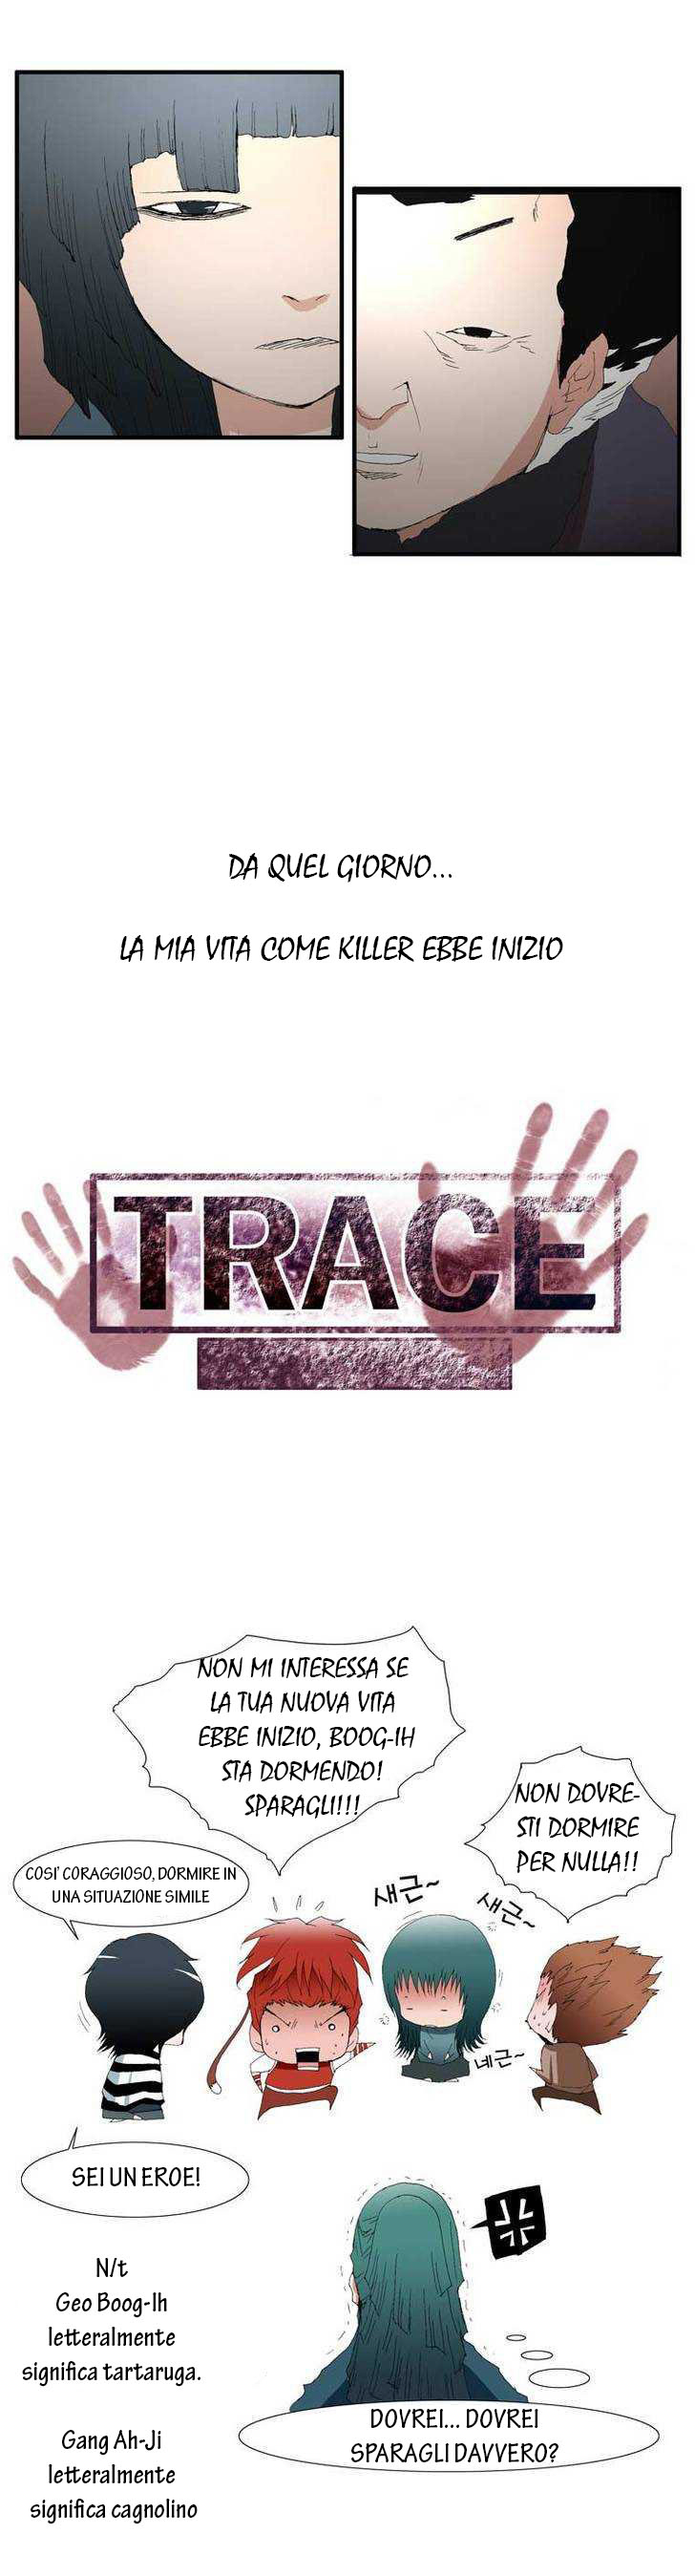 Trace 1.0 - ch 060 Zeurel